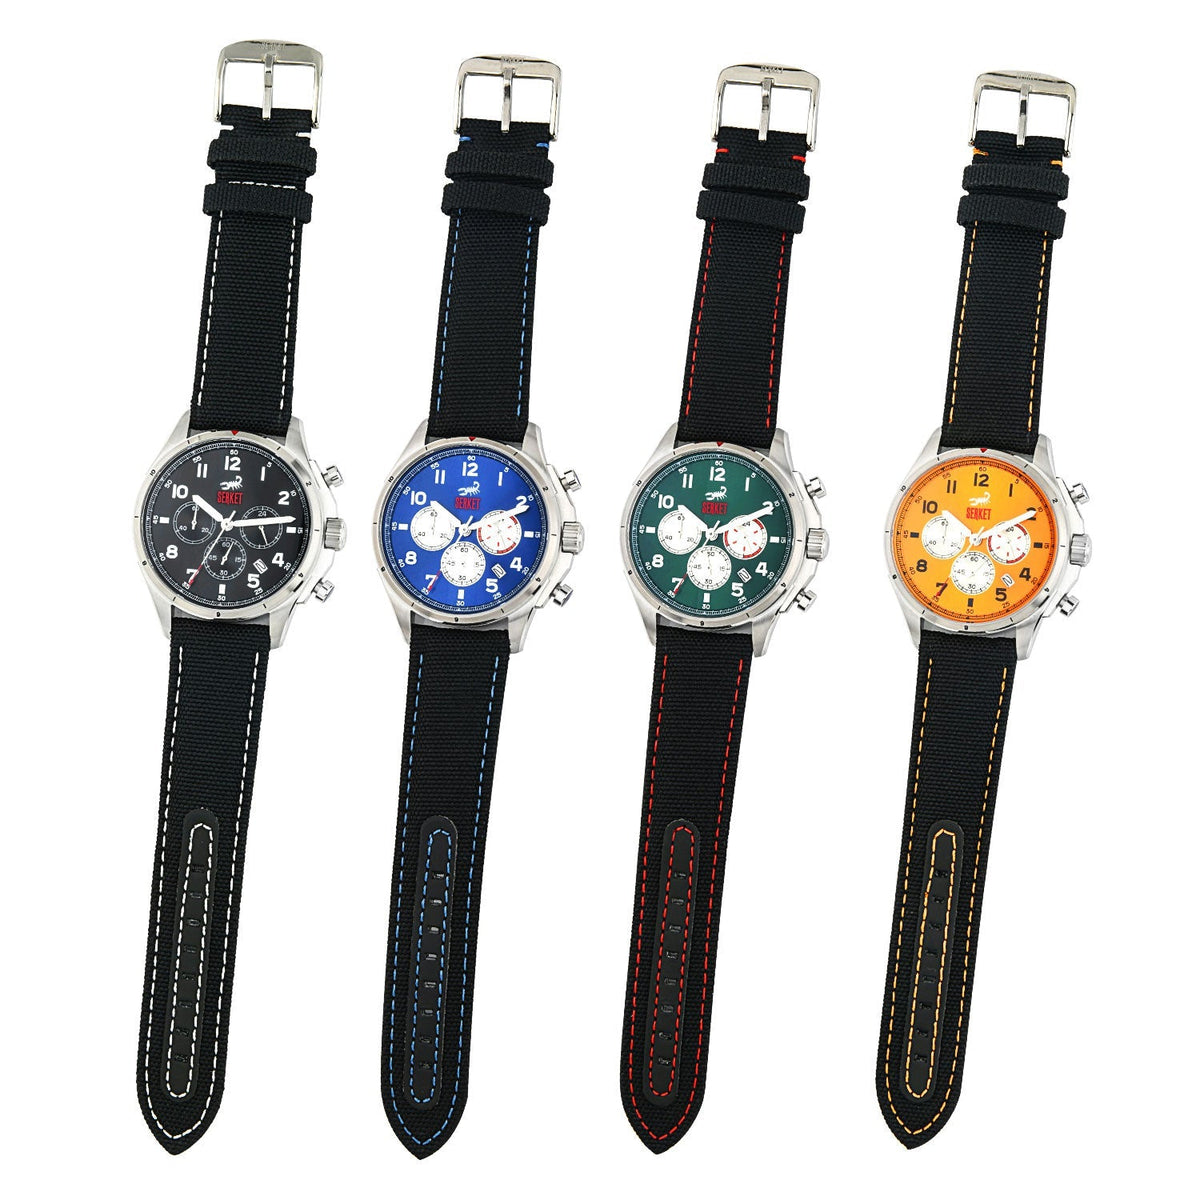 Serket Chronographe-Navy Chronograph Watch | Serket Watch Company